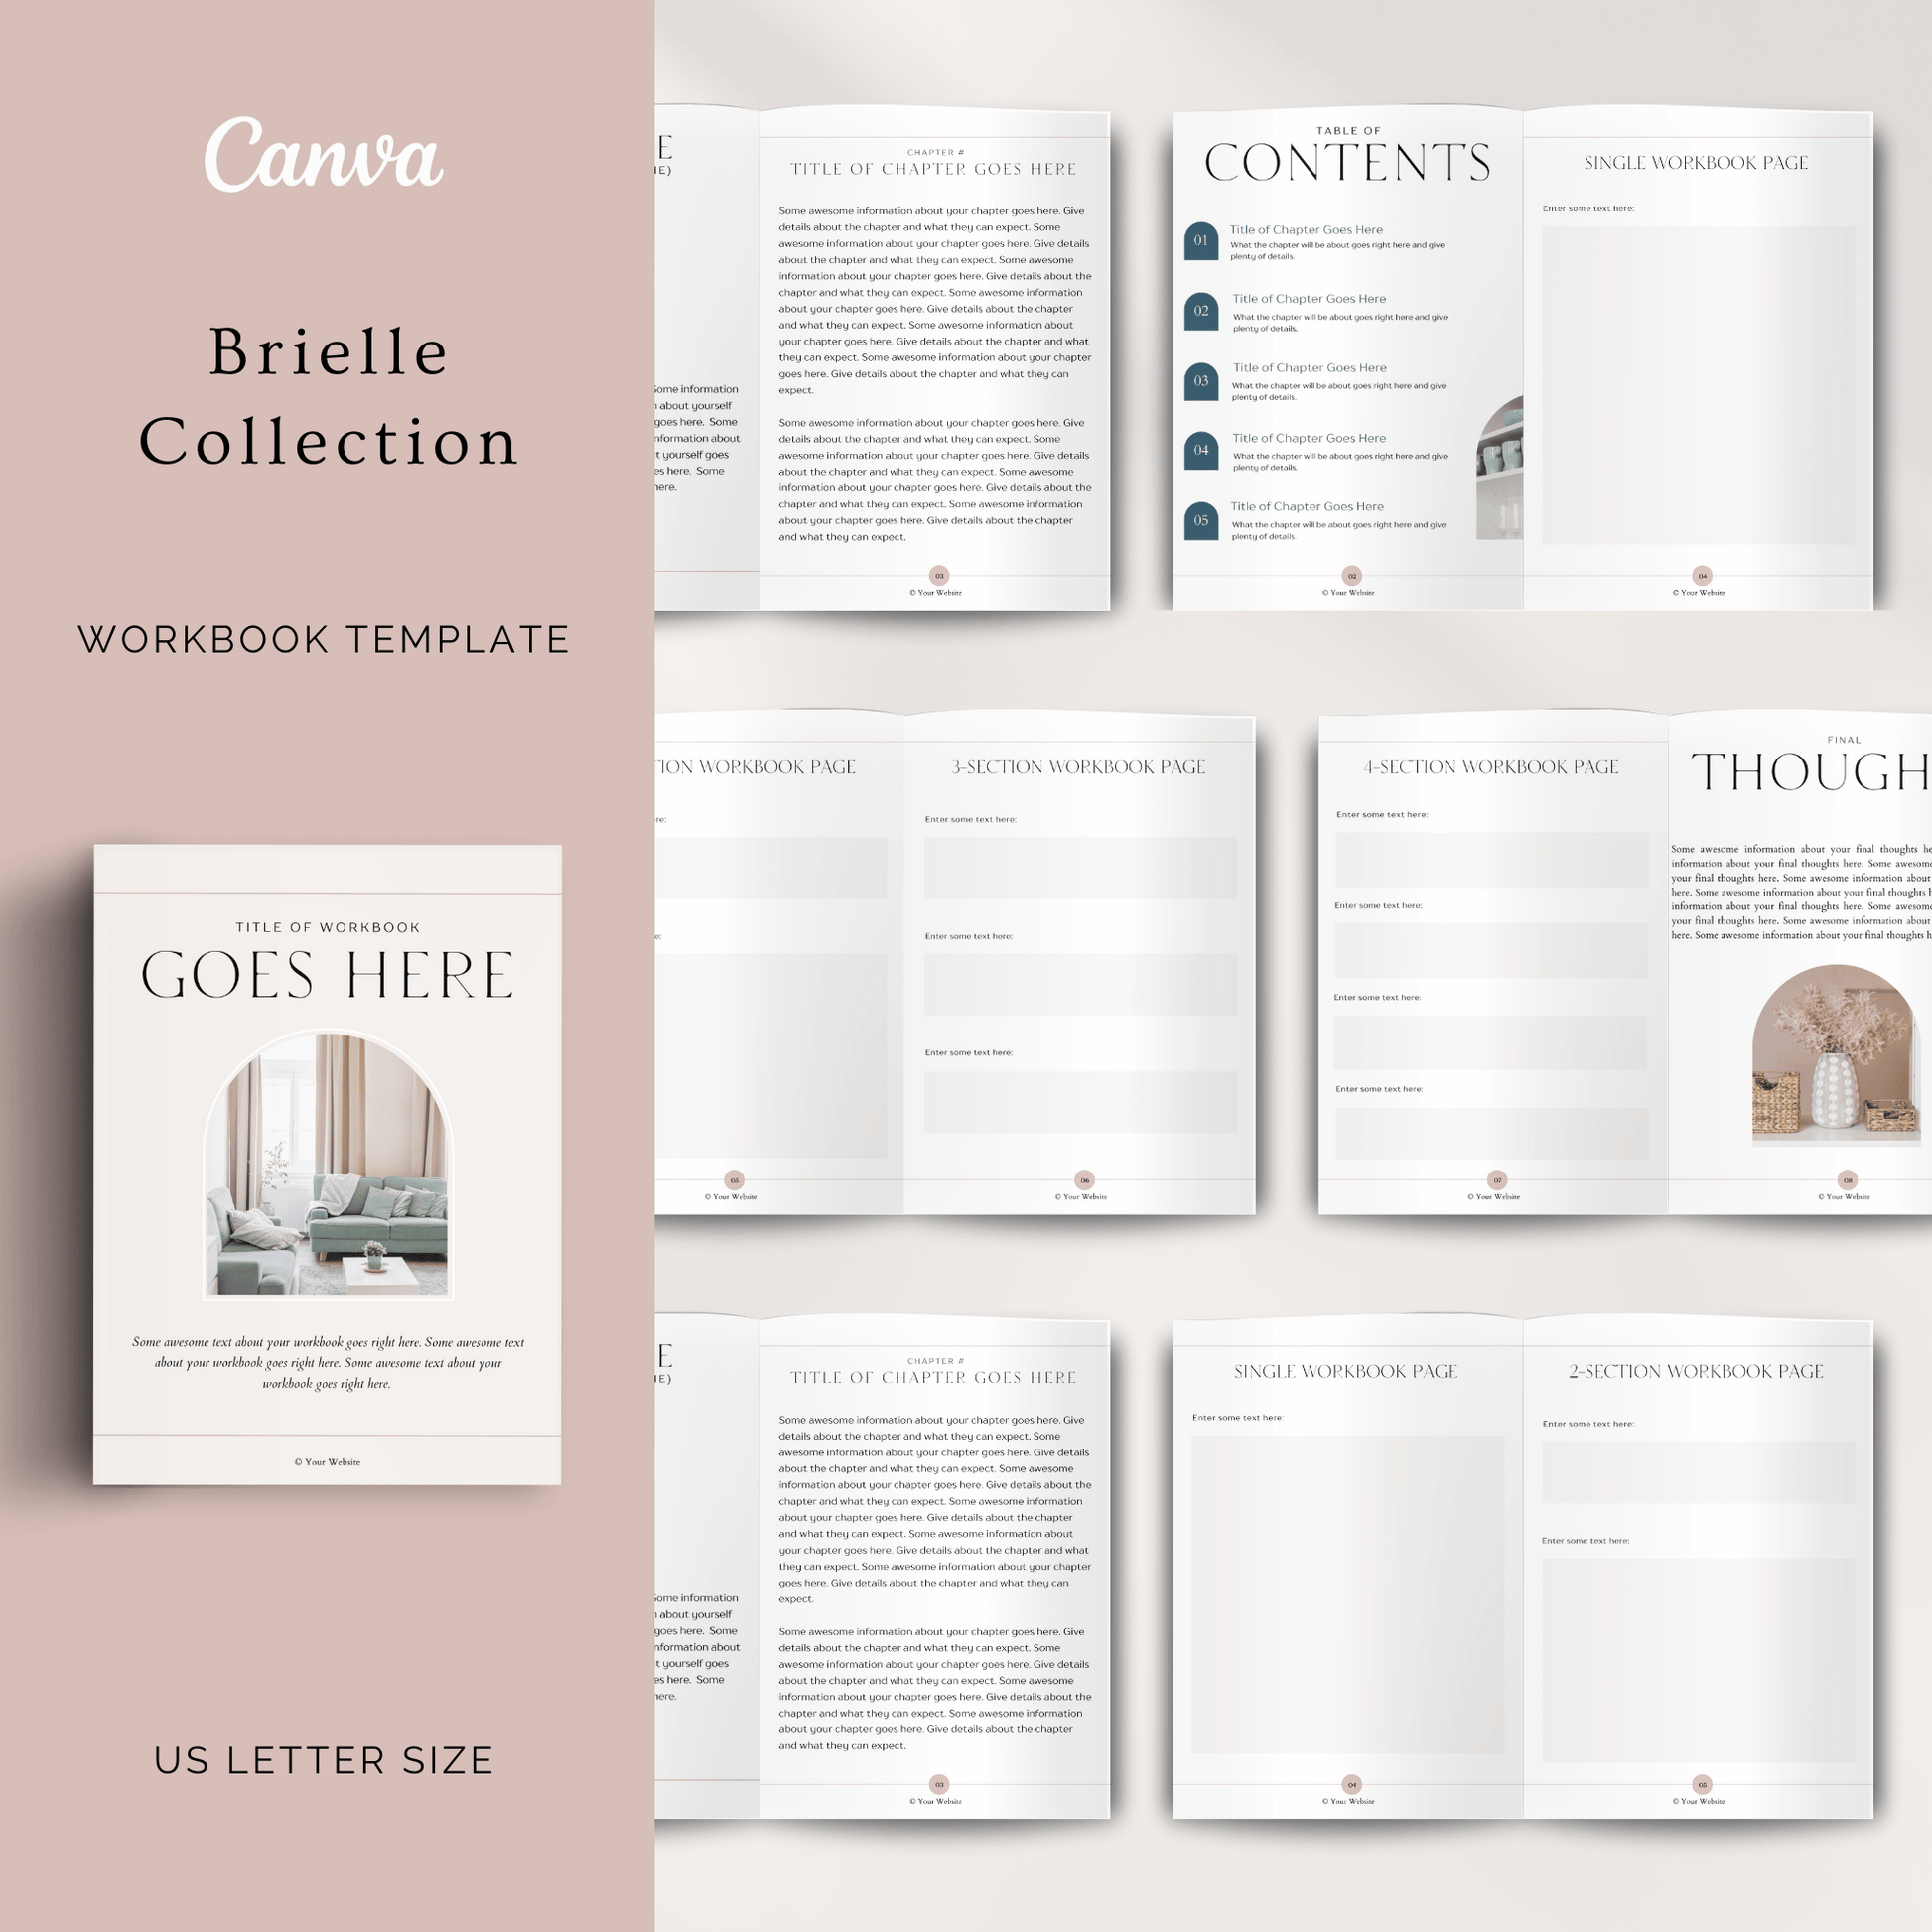 Olivia Bundle Collection of Canva Templates. Ebook, Workbook, Presentation Slide Deck and Product Mockup Canva templates for female entrepreneurs.